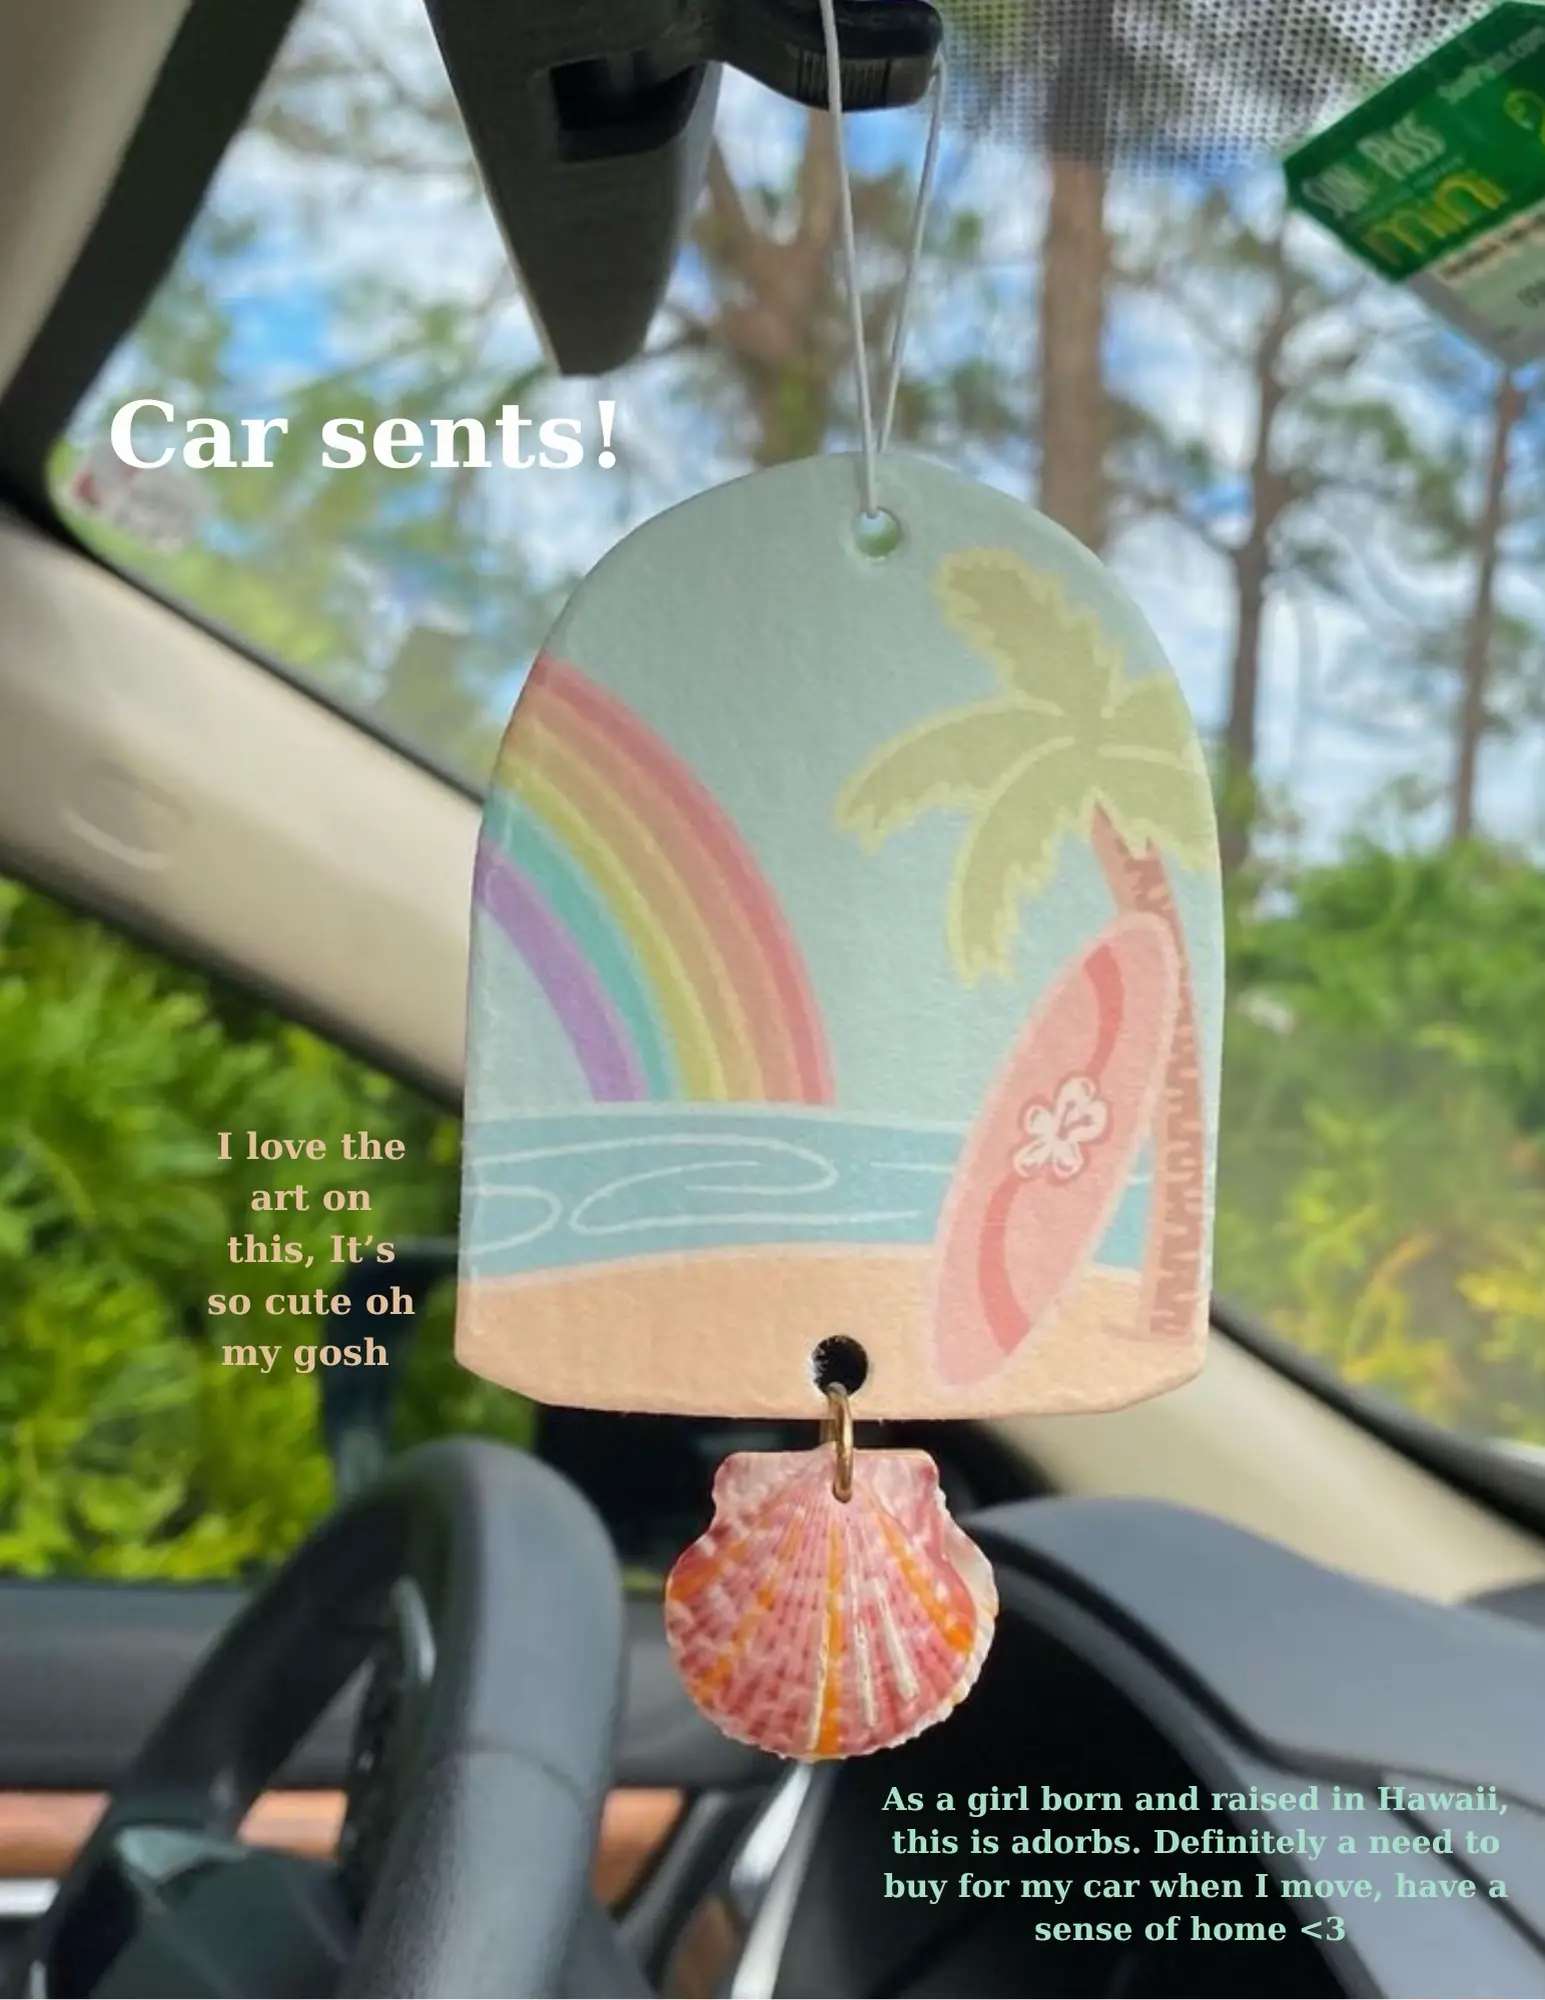 cat themed car accessories - Lemon8 Search